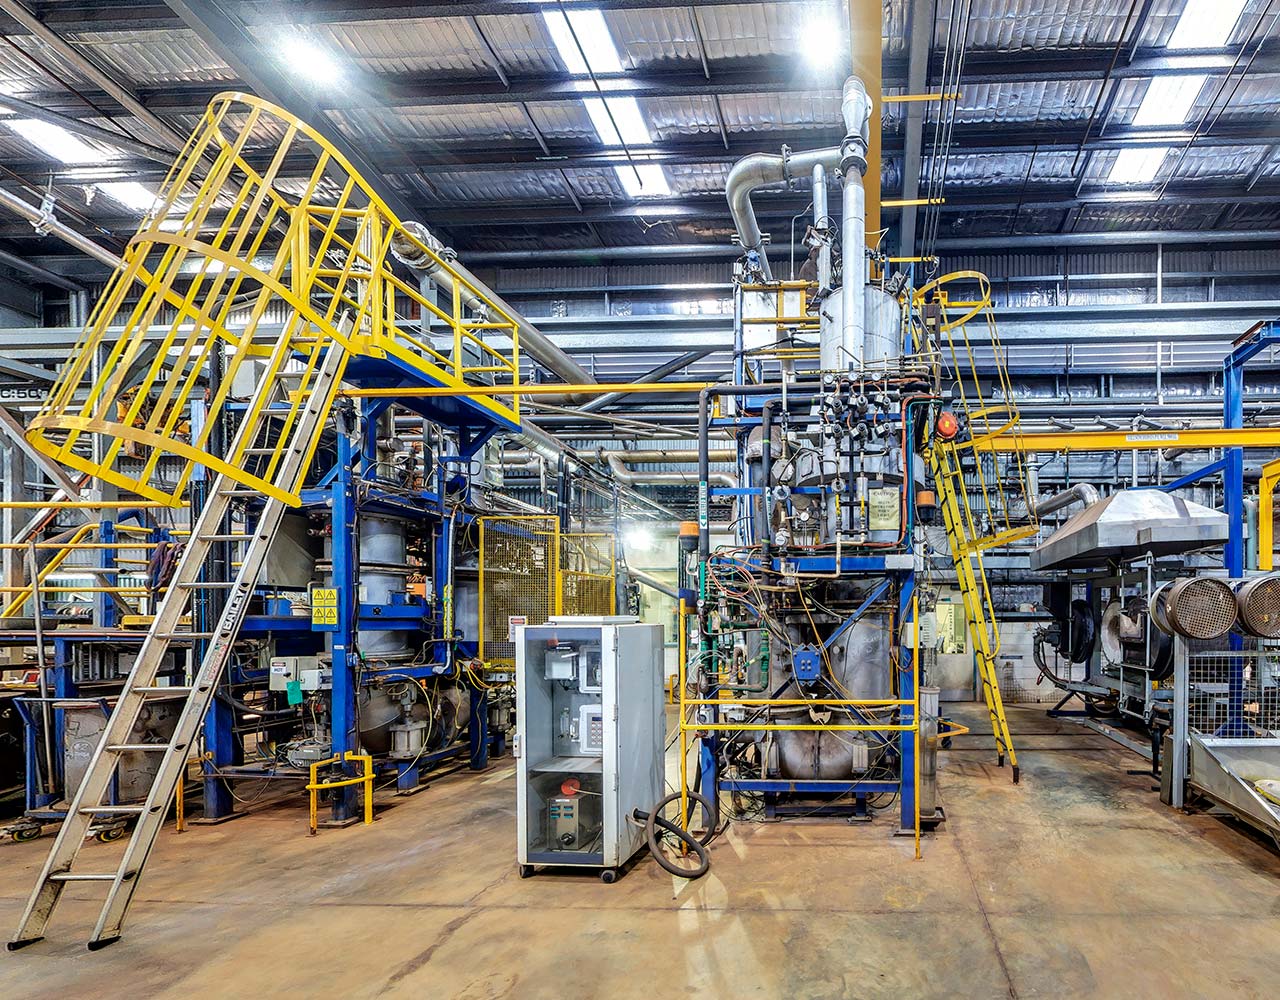 Virtual tour of iron ore processing plant